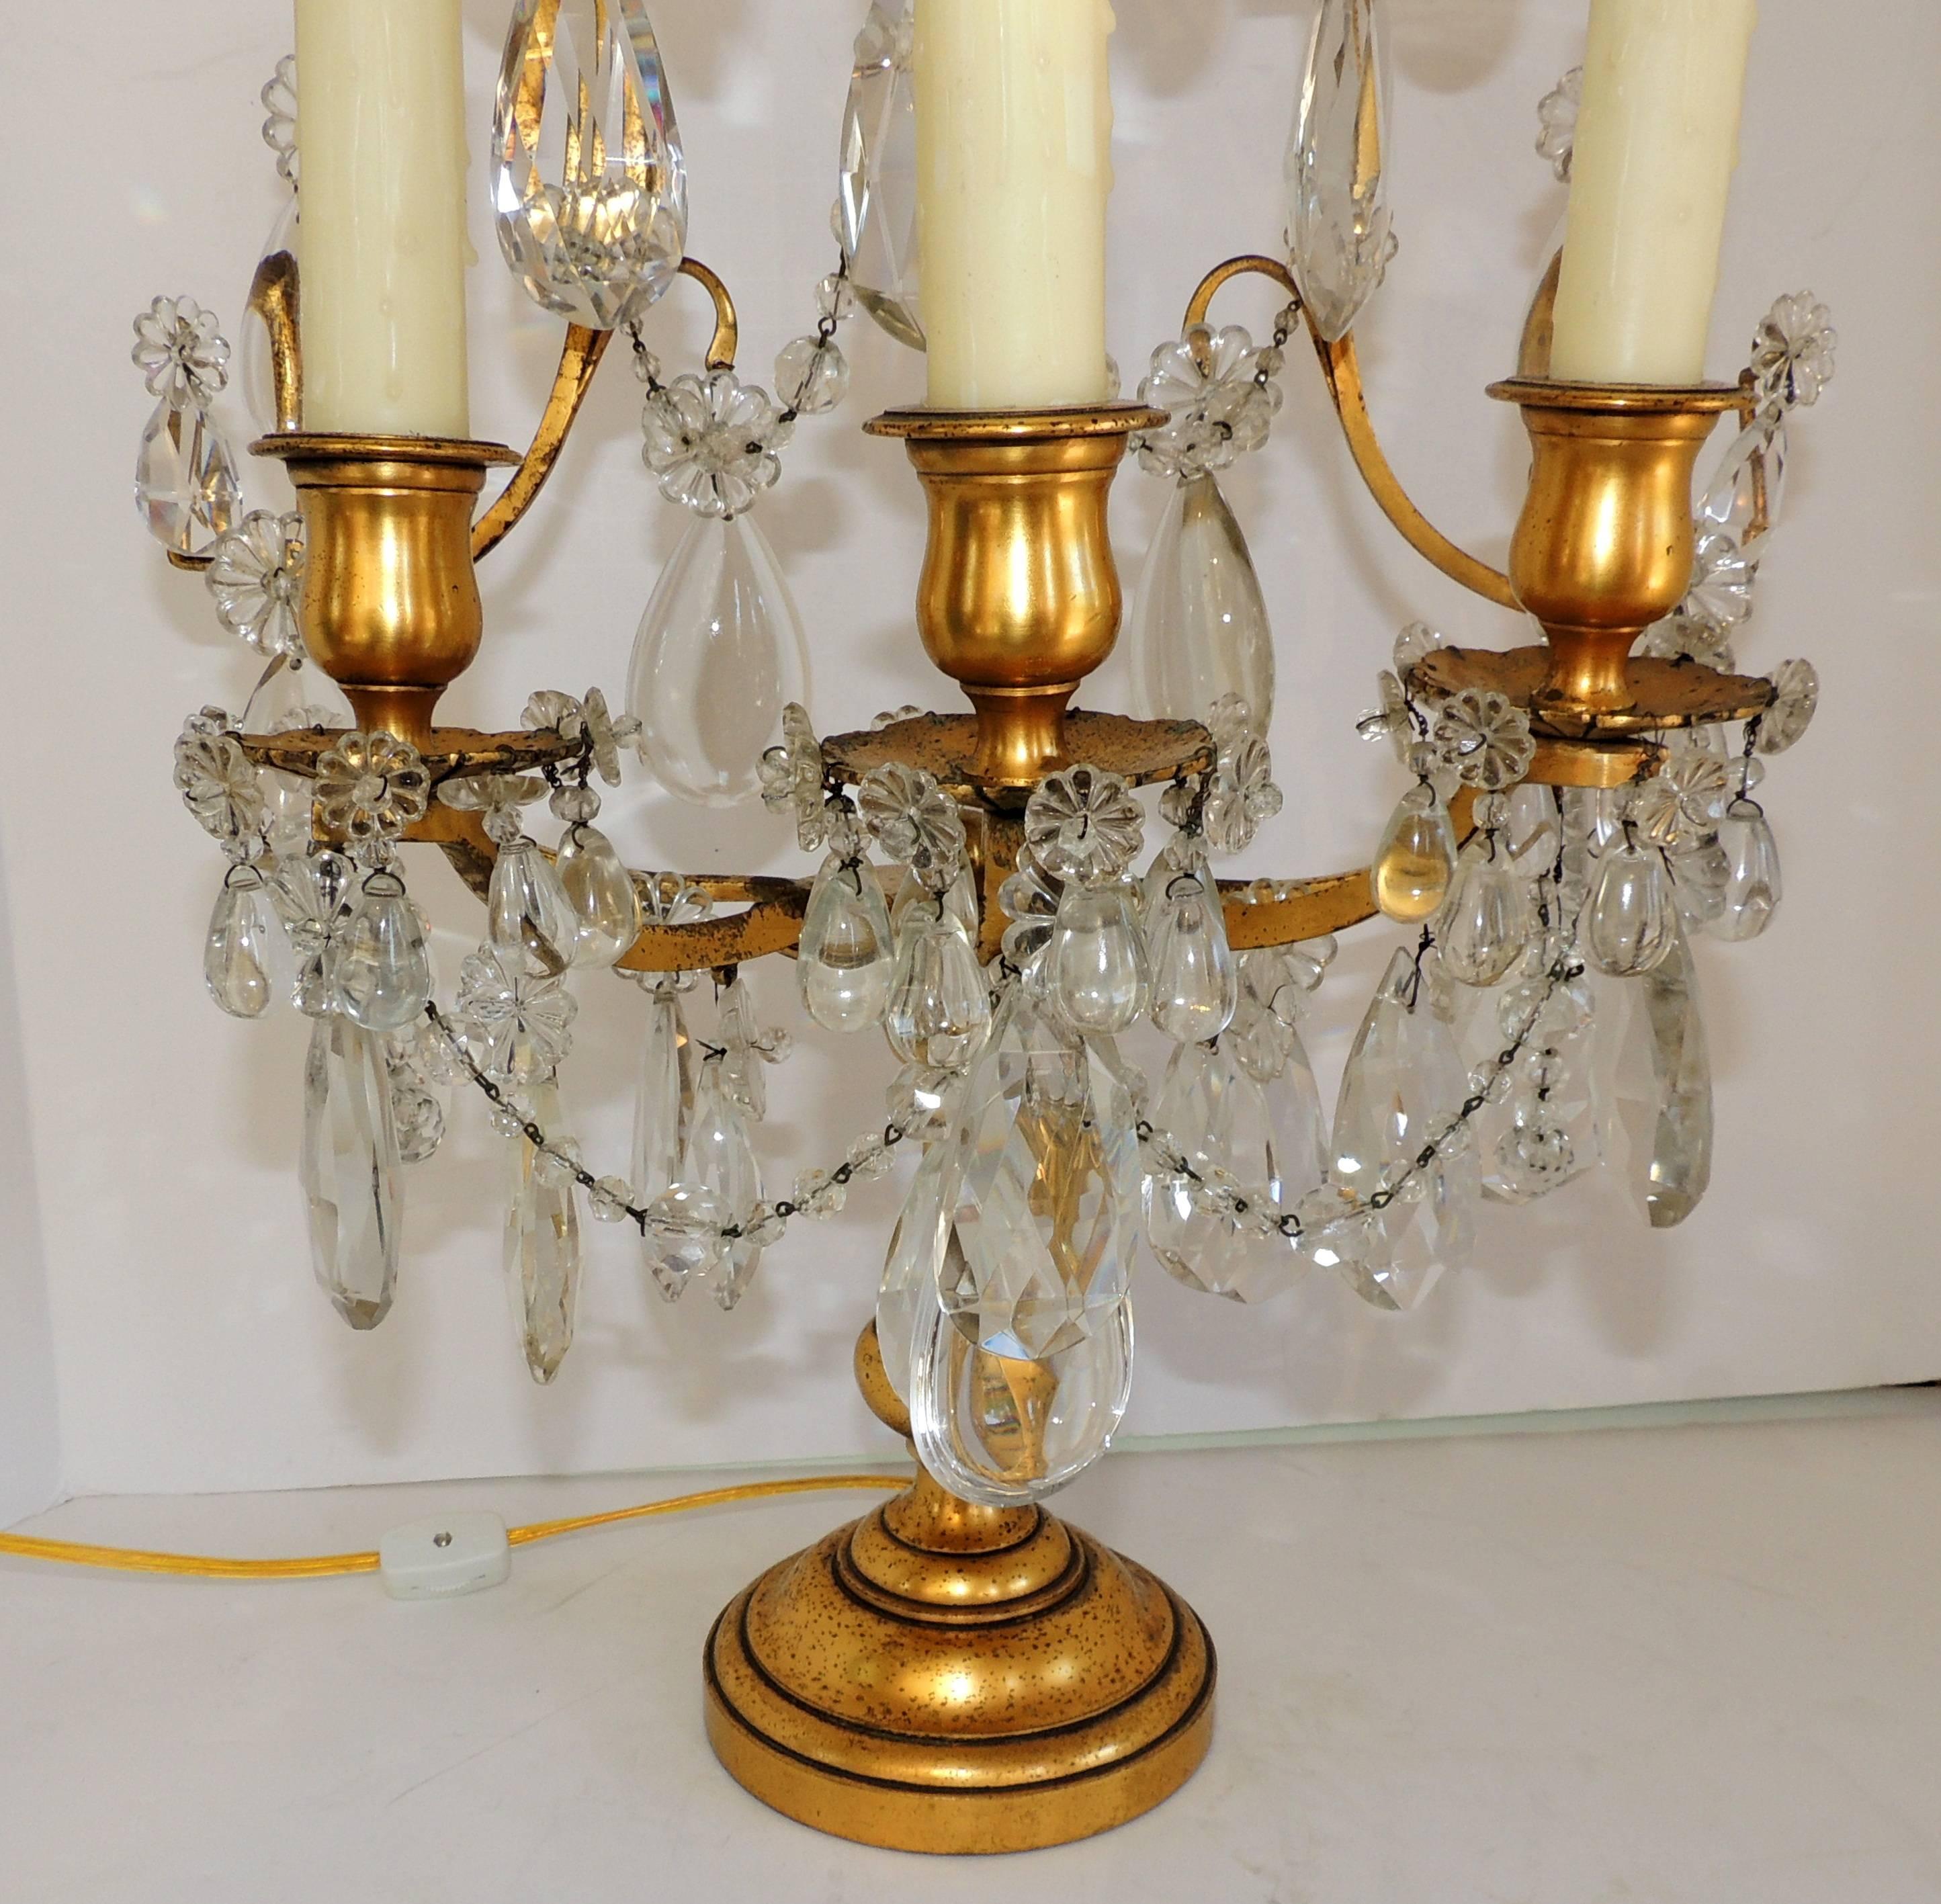 Regency Pair of French Doré Bronze Crystal Girandoles Candelabras Three-Light Lamps For Sale